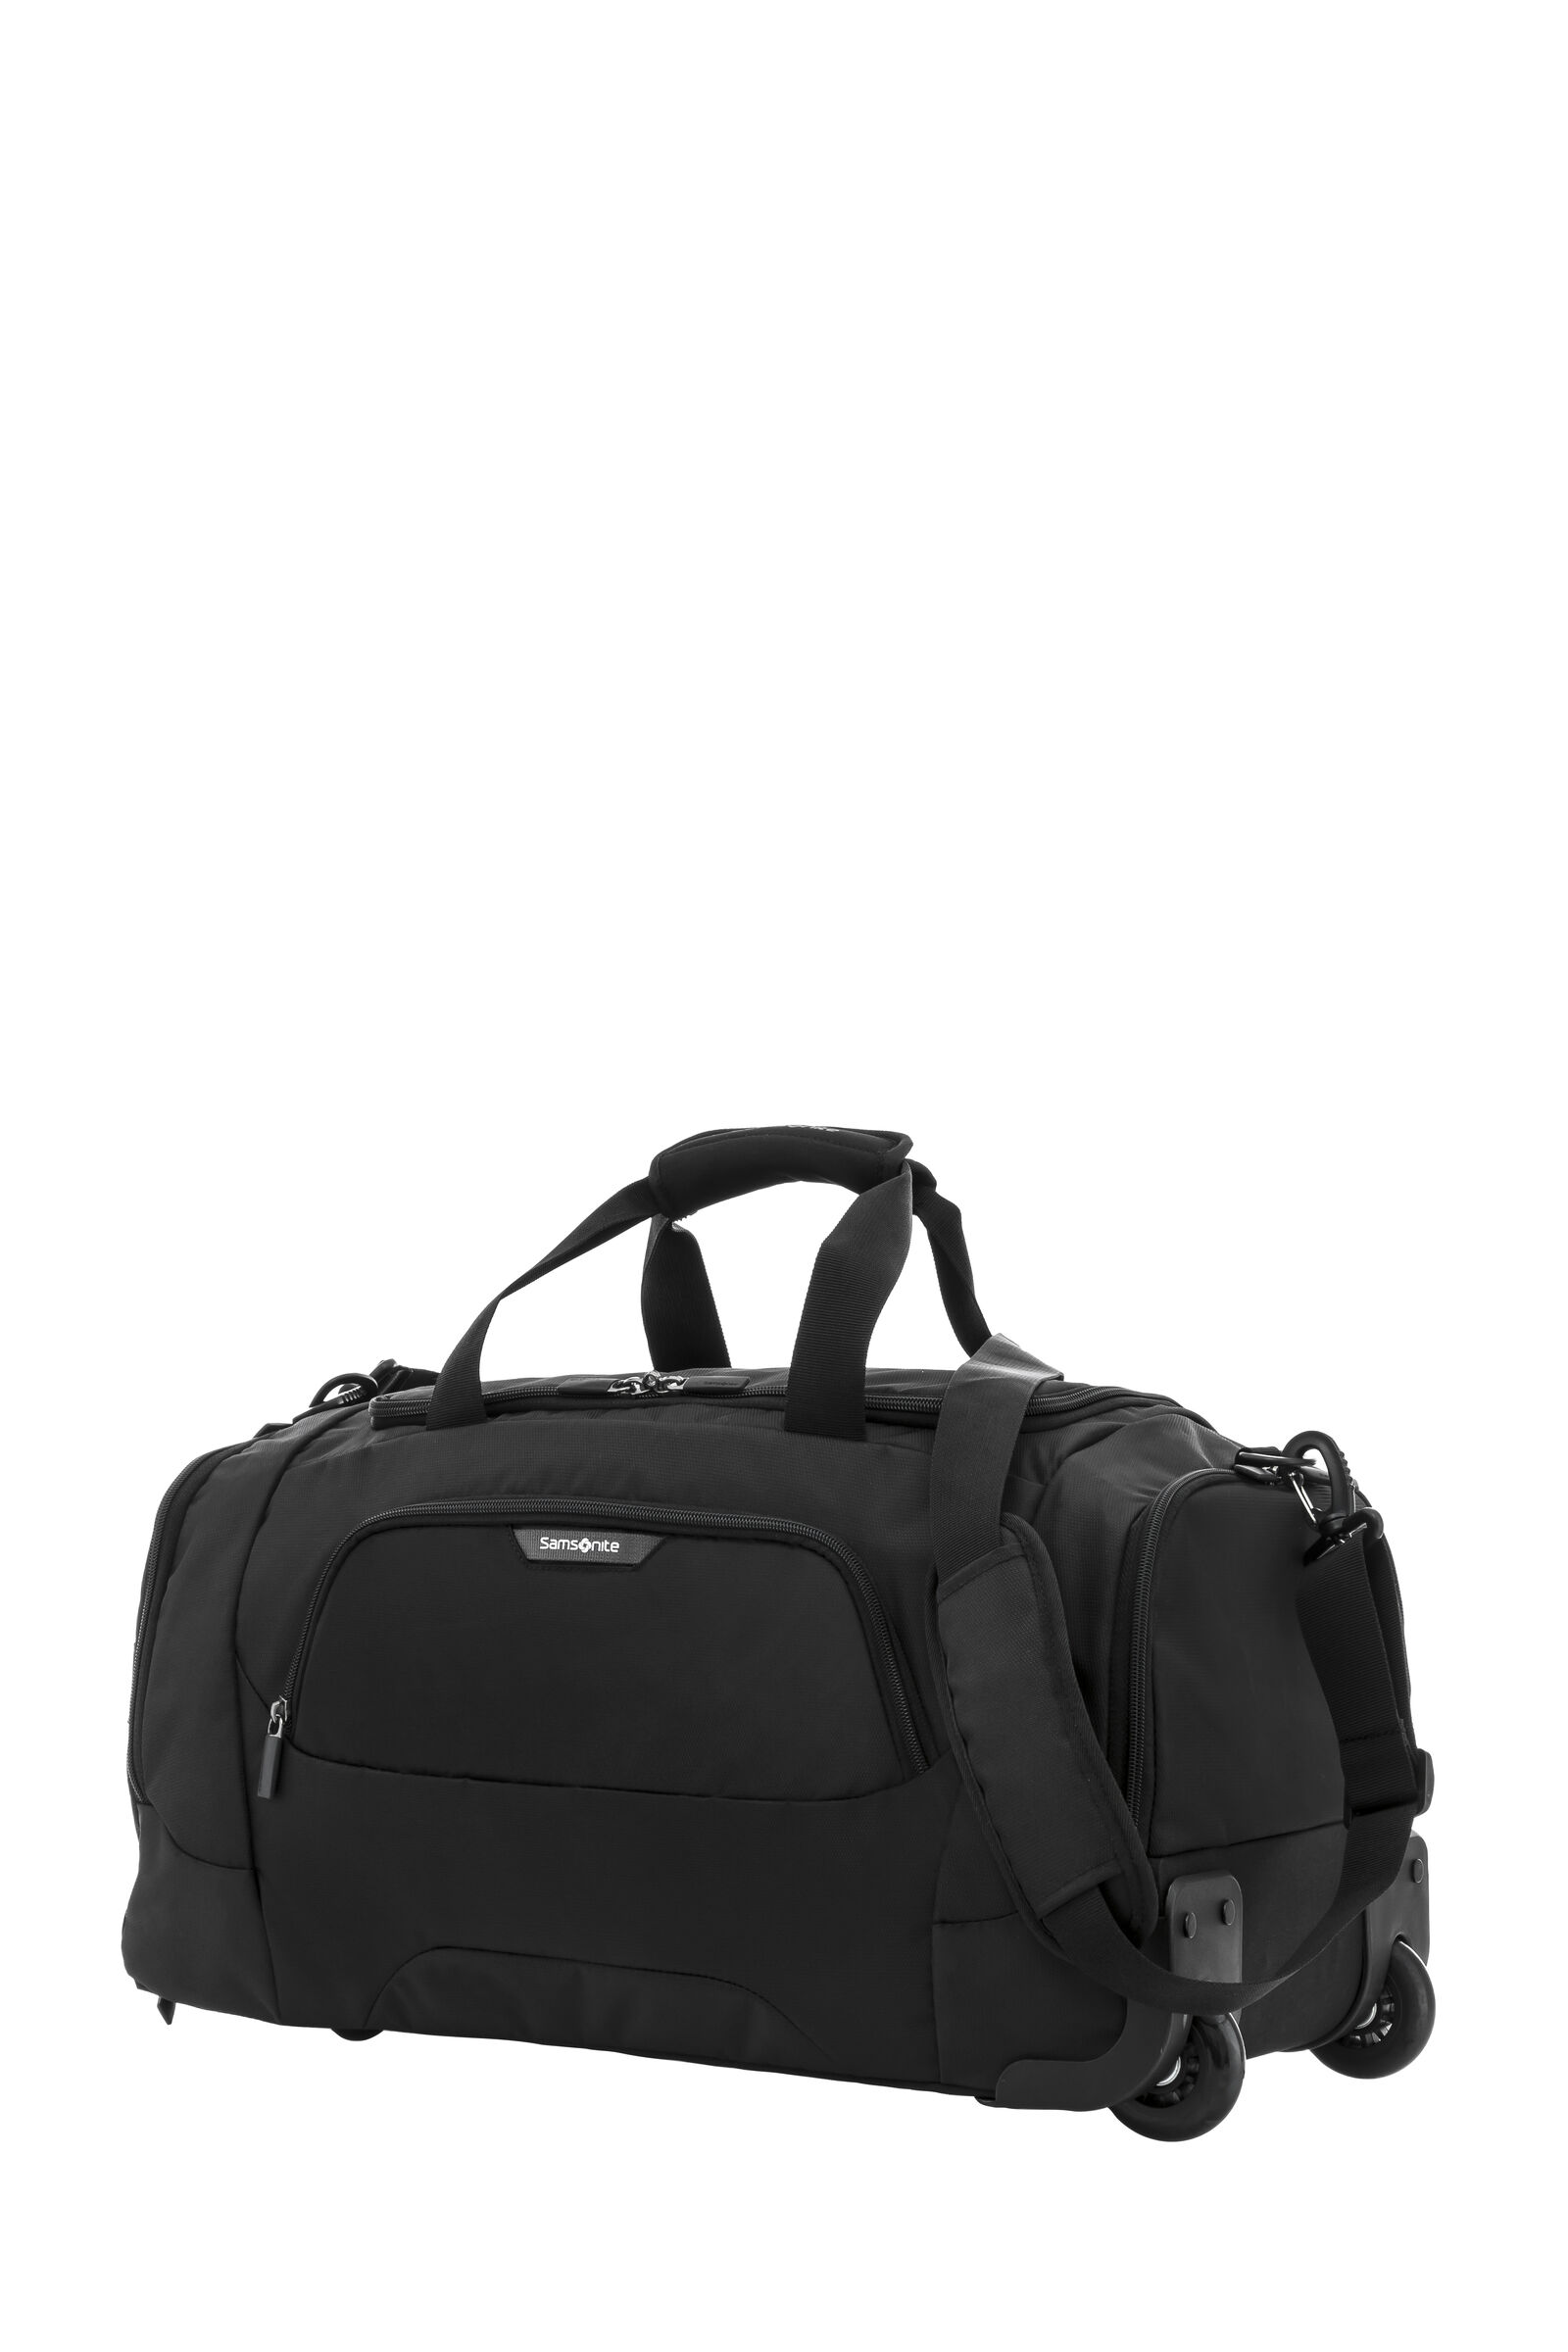 Global Ta Foldable Duffle Black | Rolling Luggage UK